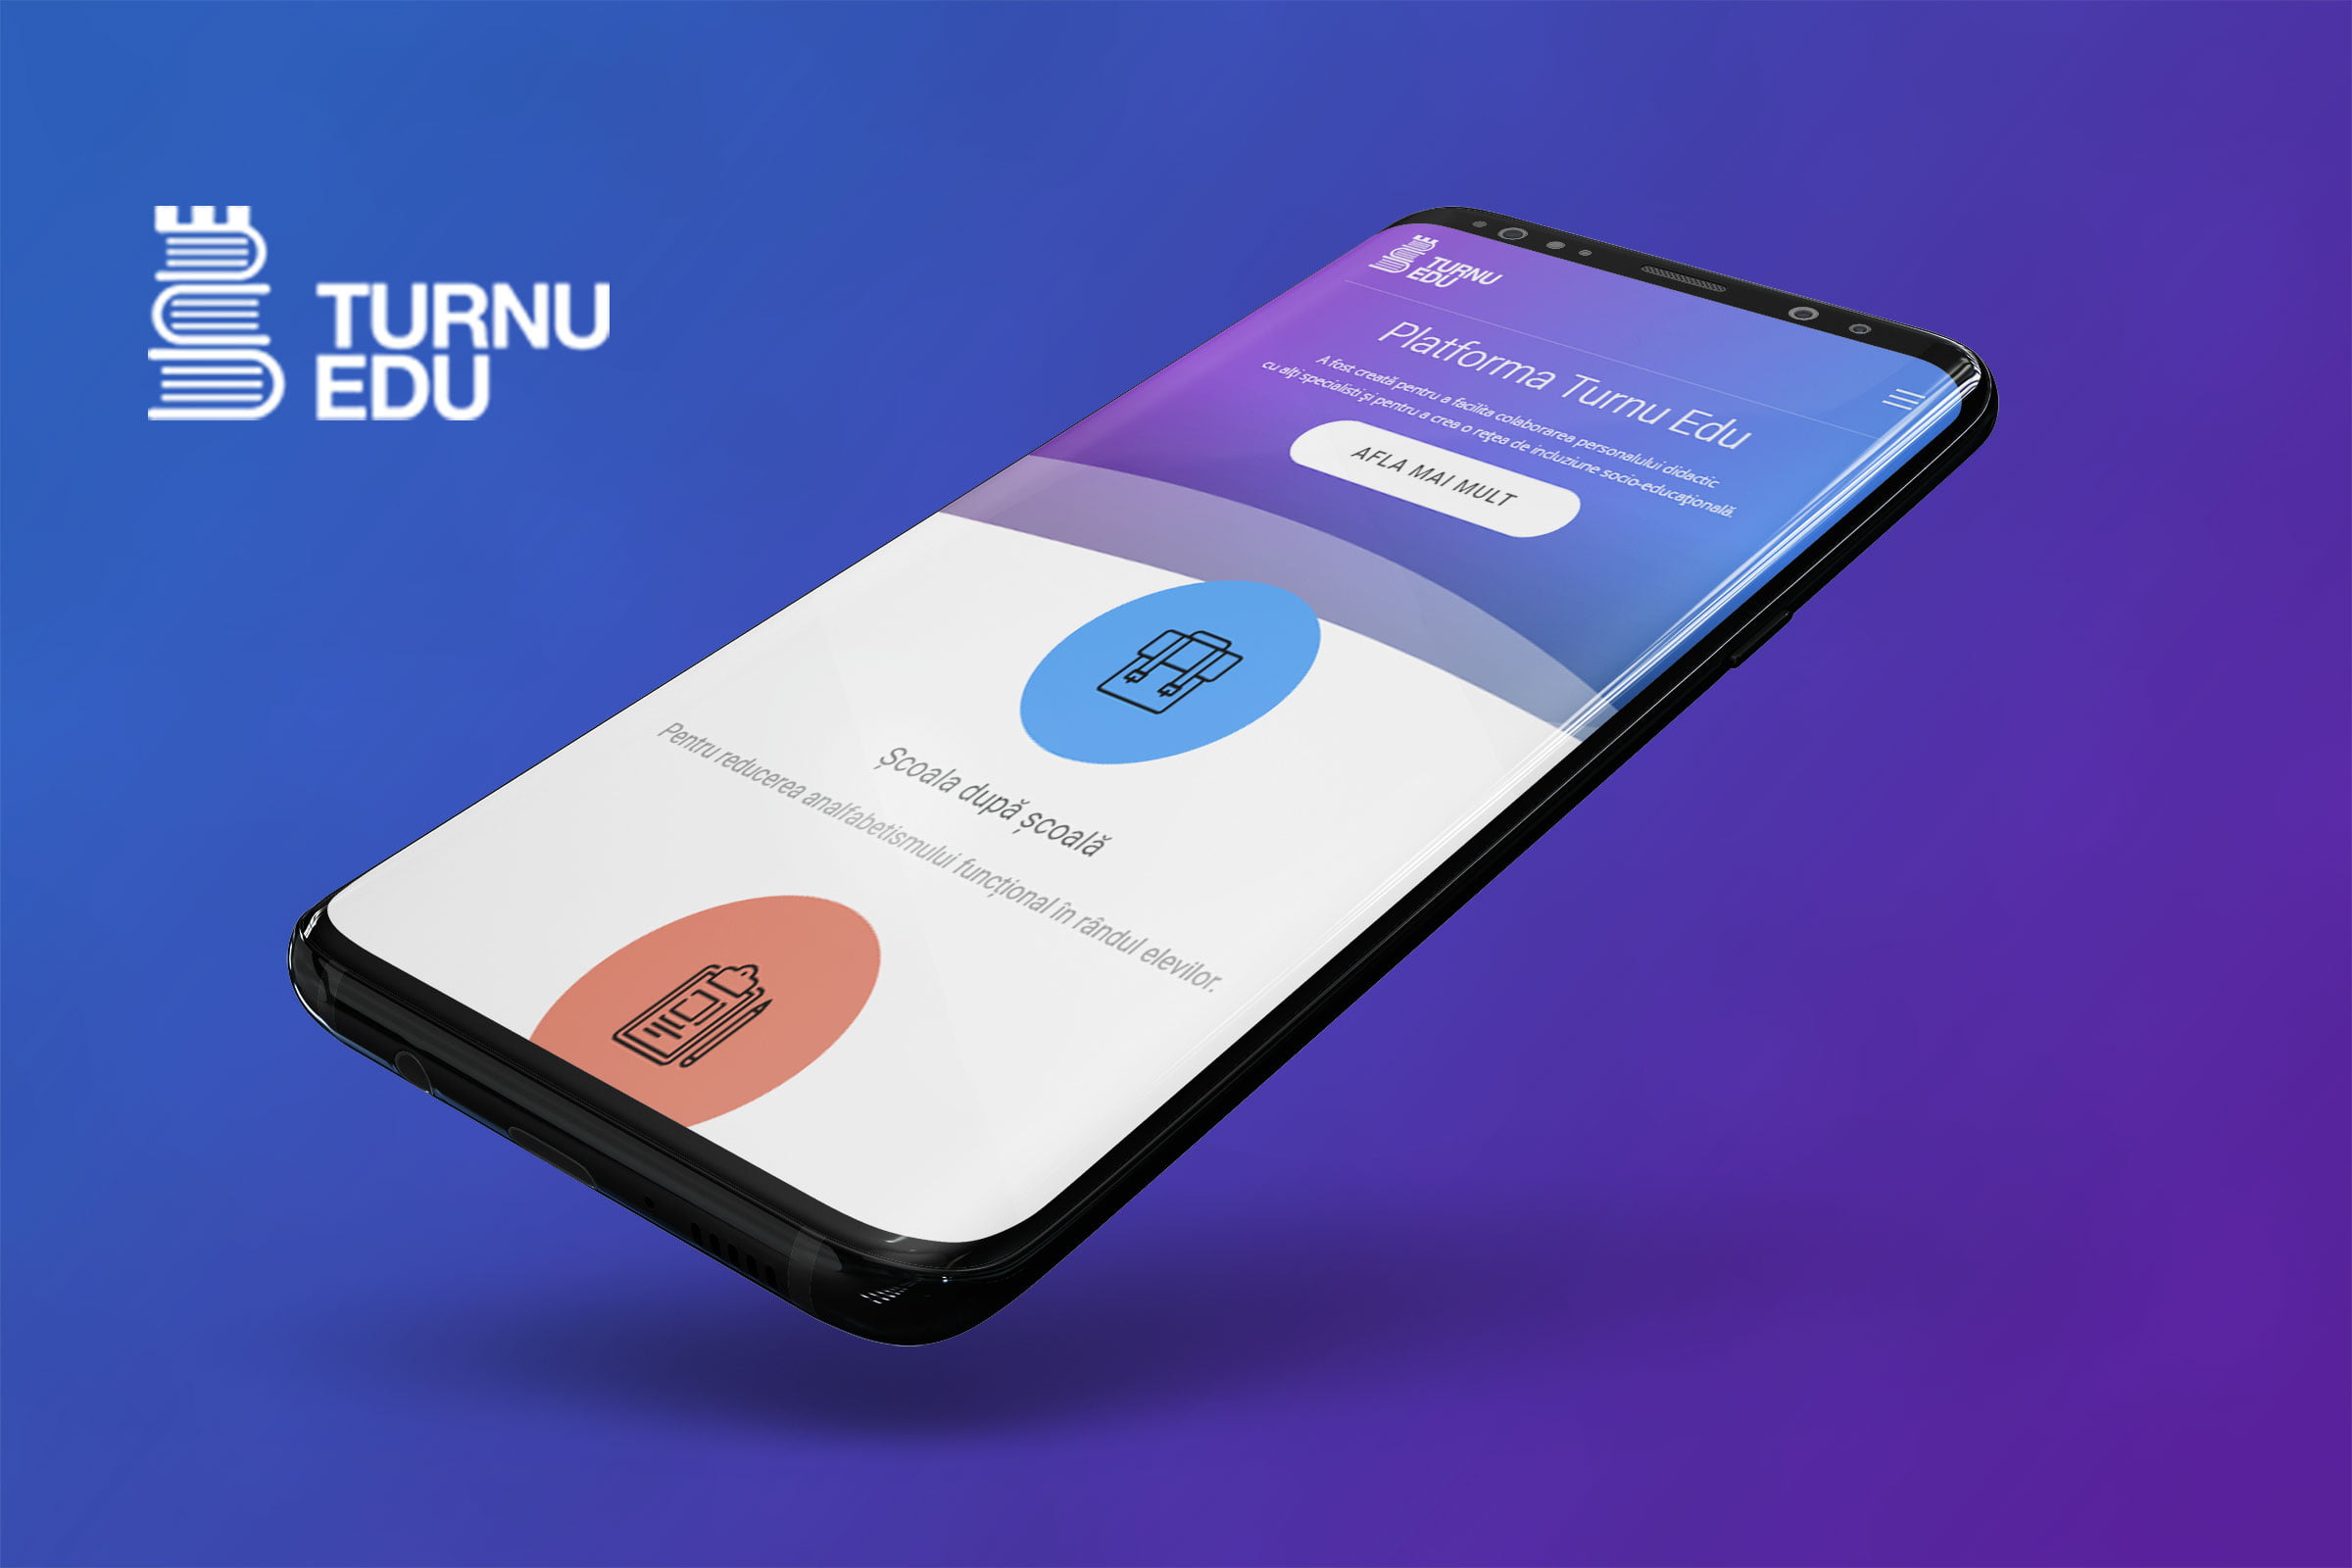 Logo, web design and app development for Turnu Edu - communication platform for teachers in Turnu Măgurele